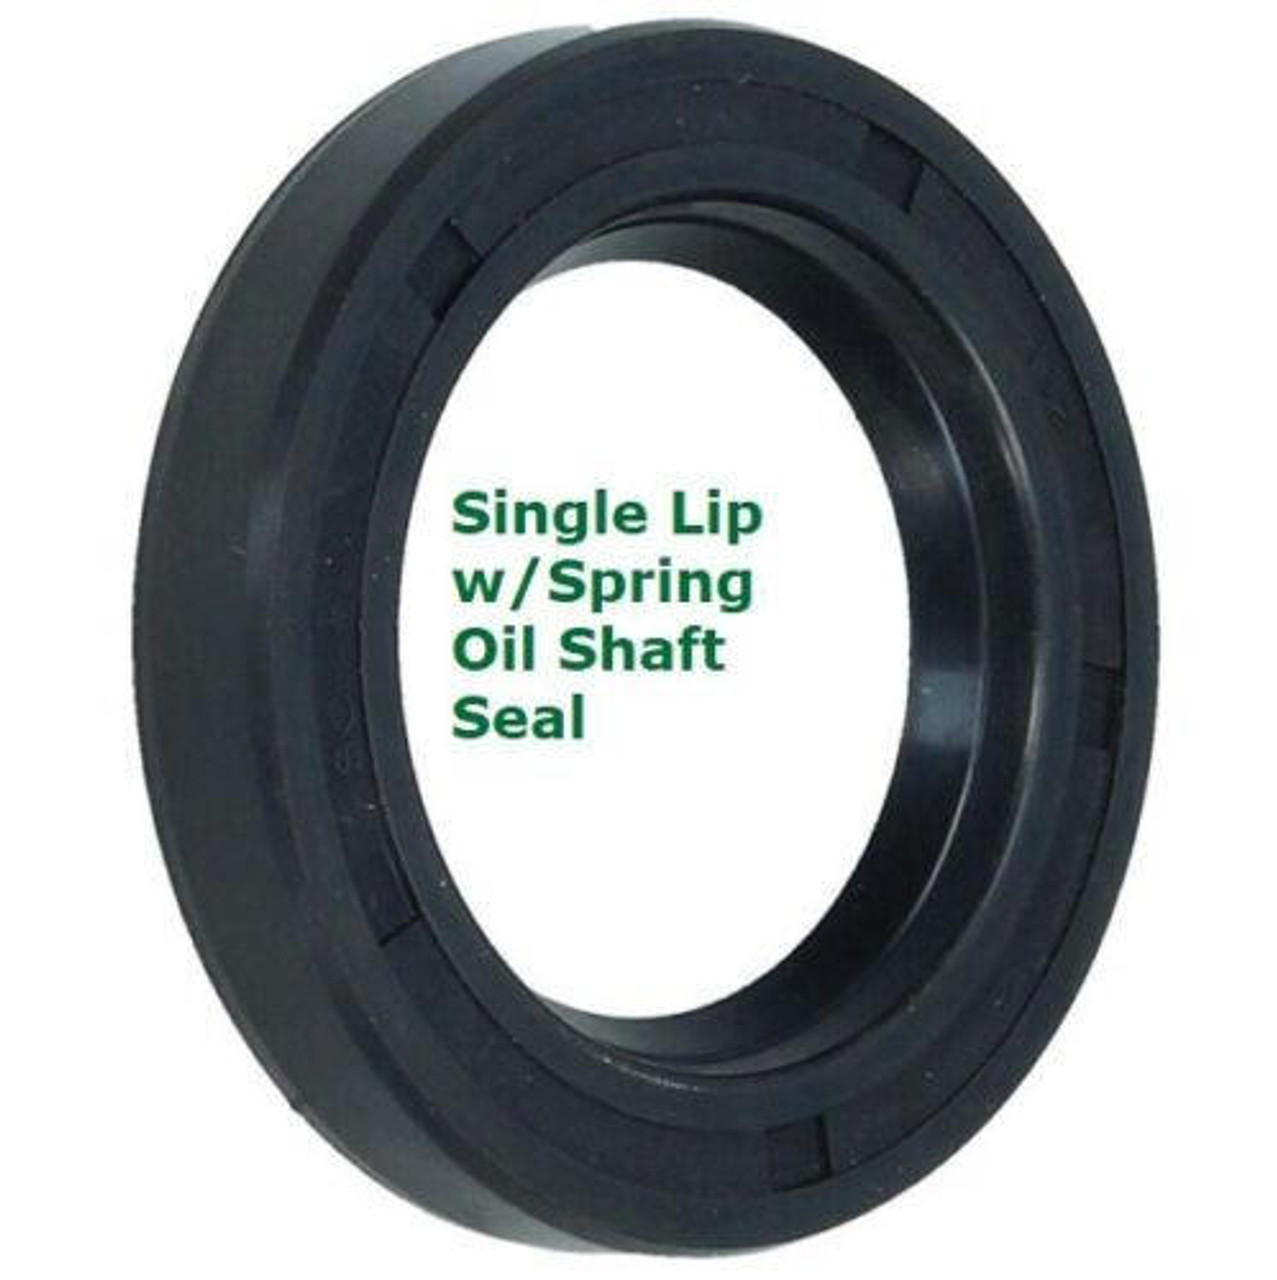 Metric Oil Shaft Seal 145 x 175 x 15mm   Single Lip   Price for 1 pc